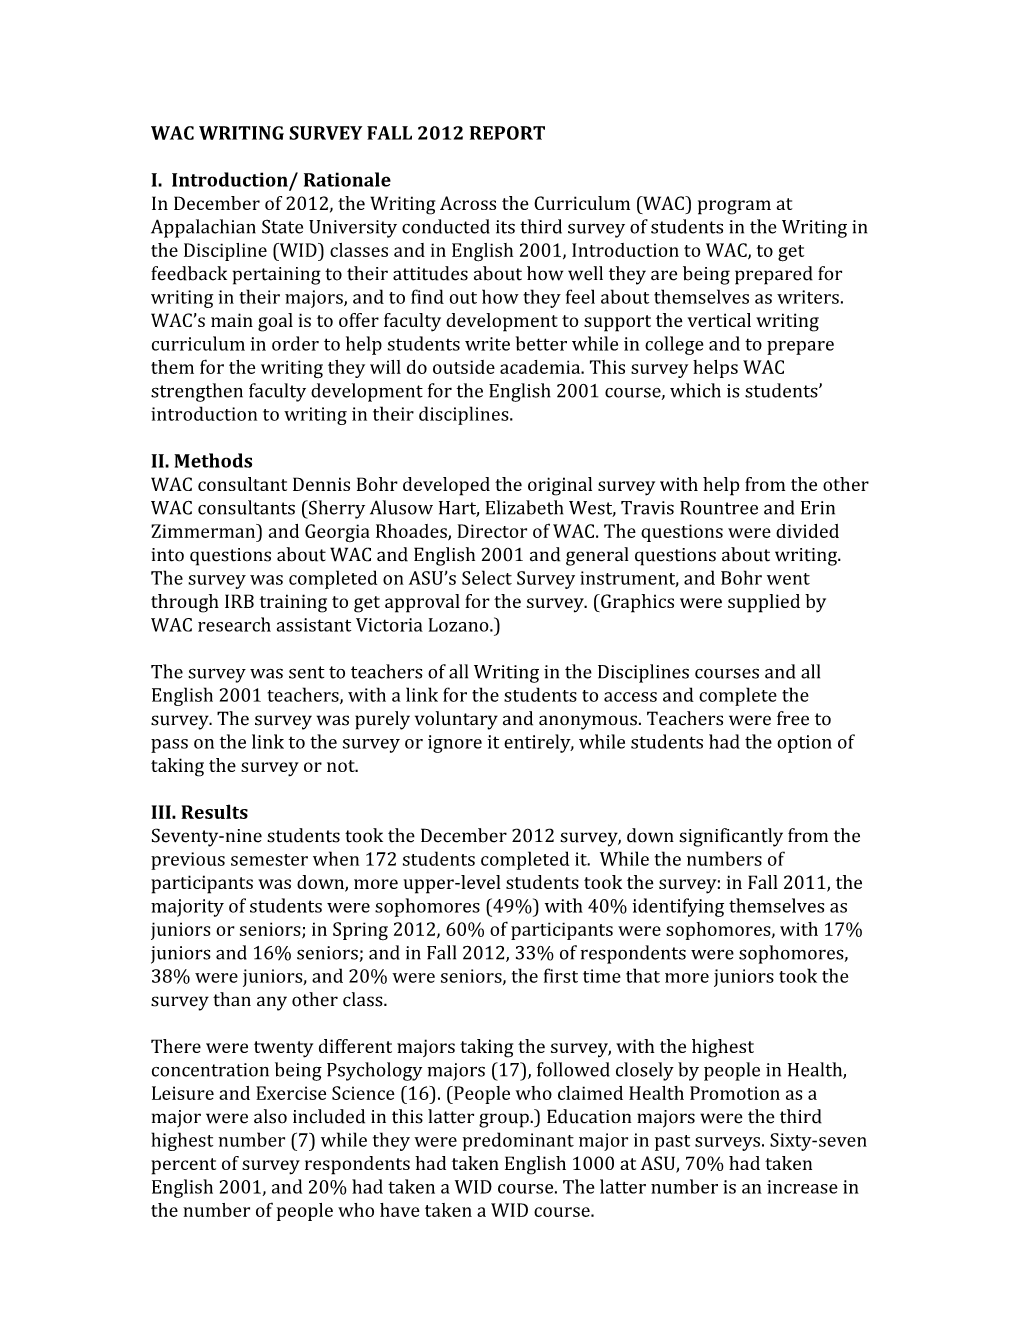 Wac Writing Survey Fall 2012 Report